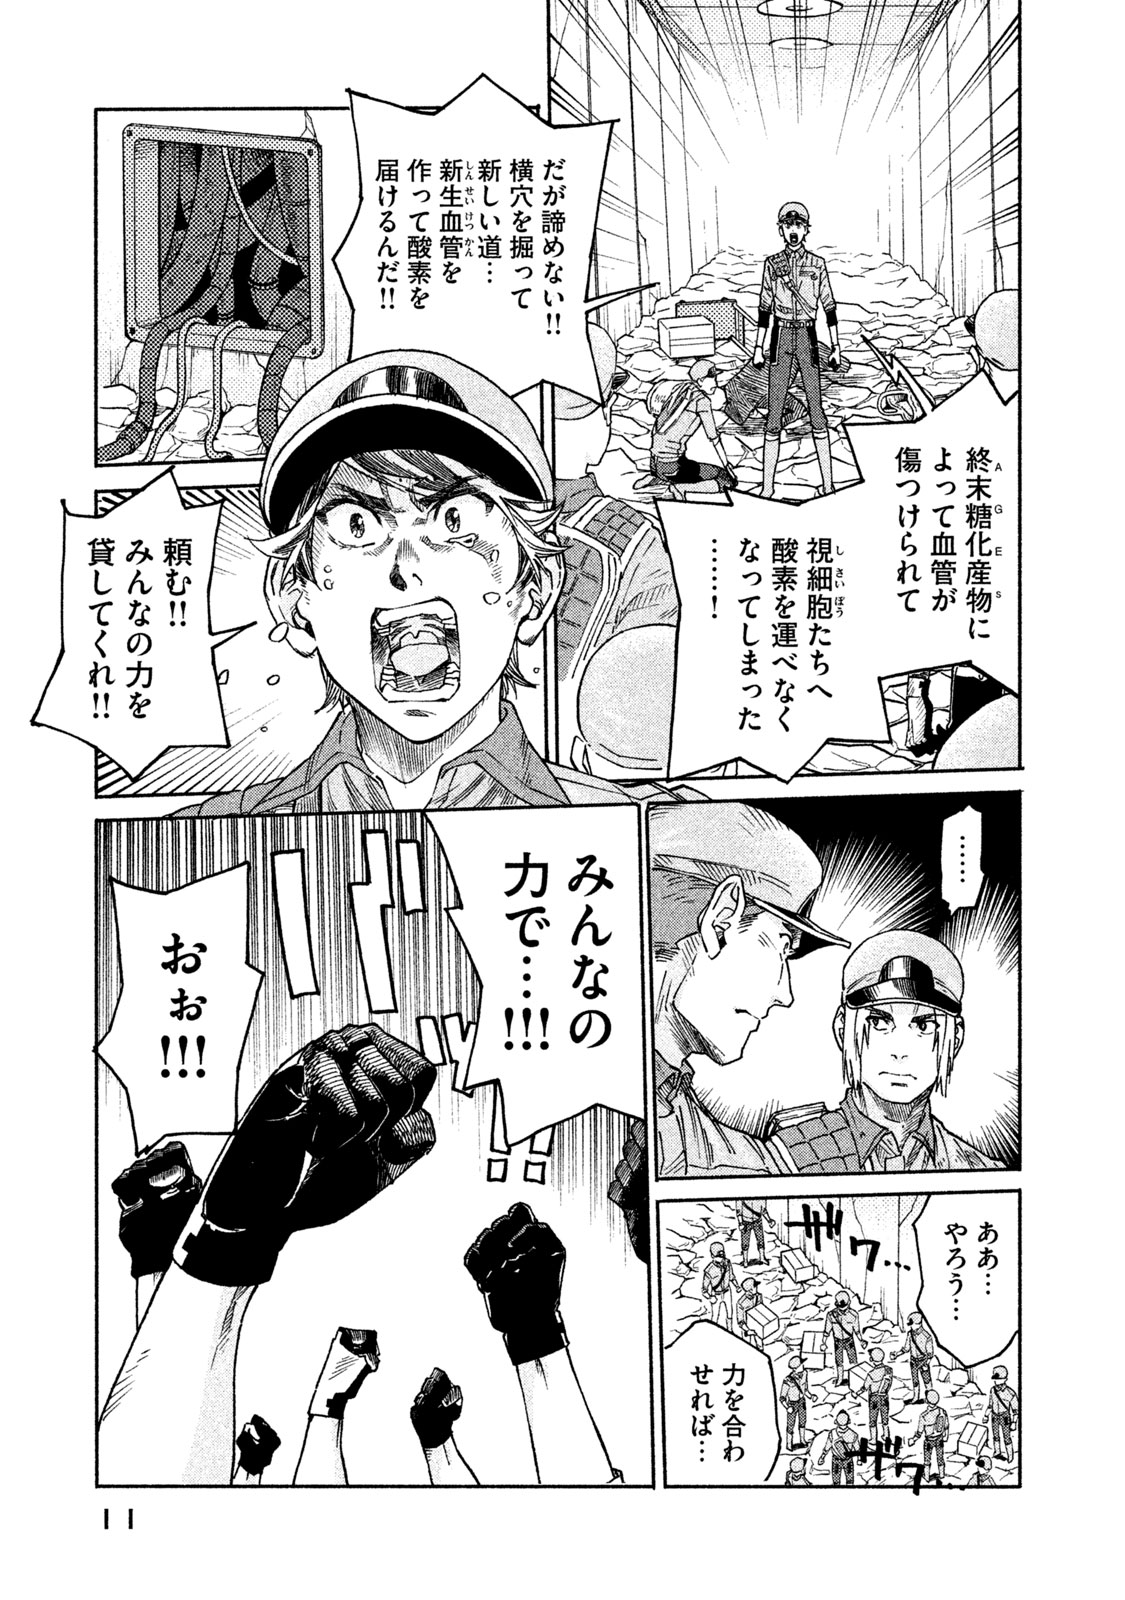 Hataraku Saibou BLACK - Chapter 25 - Page 13